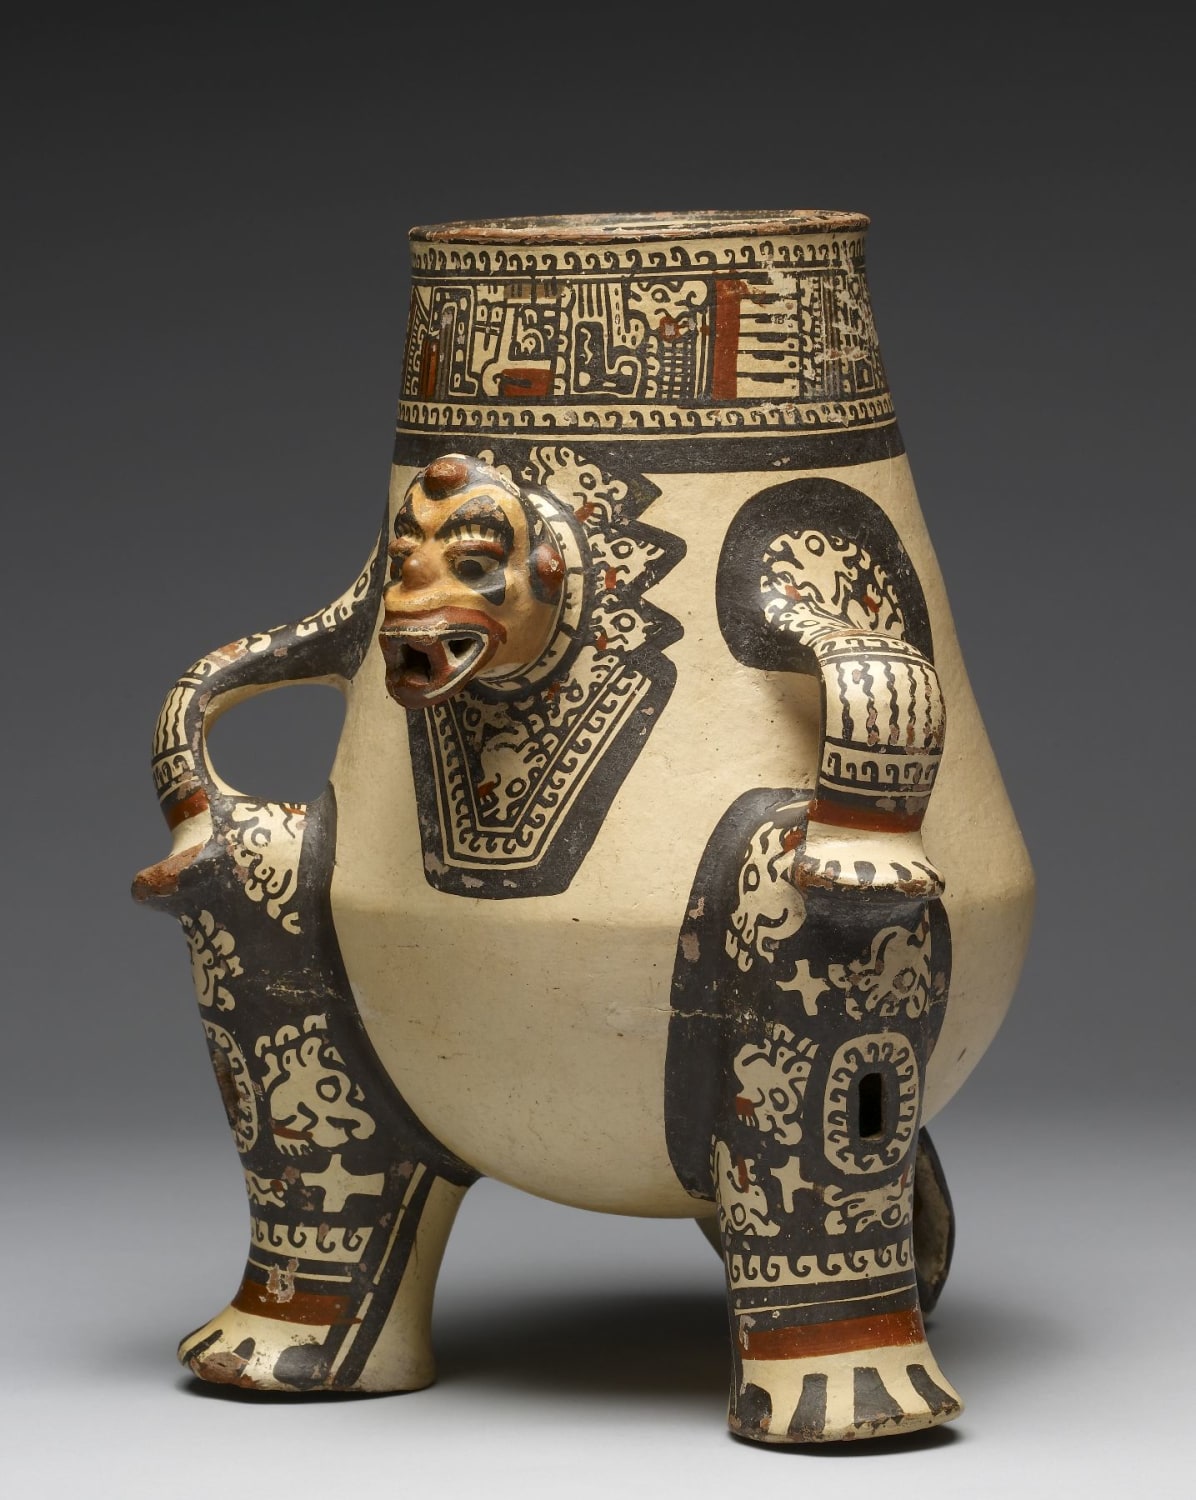 Ceramic Pottery Showing Seated Shaman Transforming Into Spirit Animal, Kingdom Of Nicoya, Costa Rica, ca AD 1000-1350